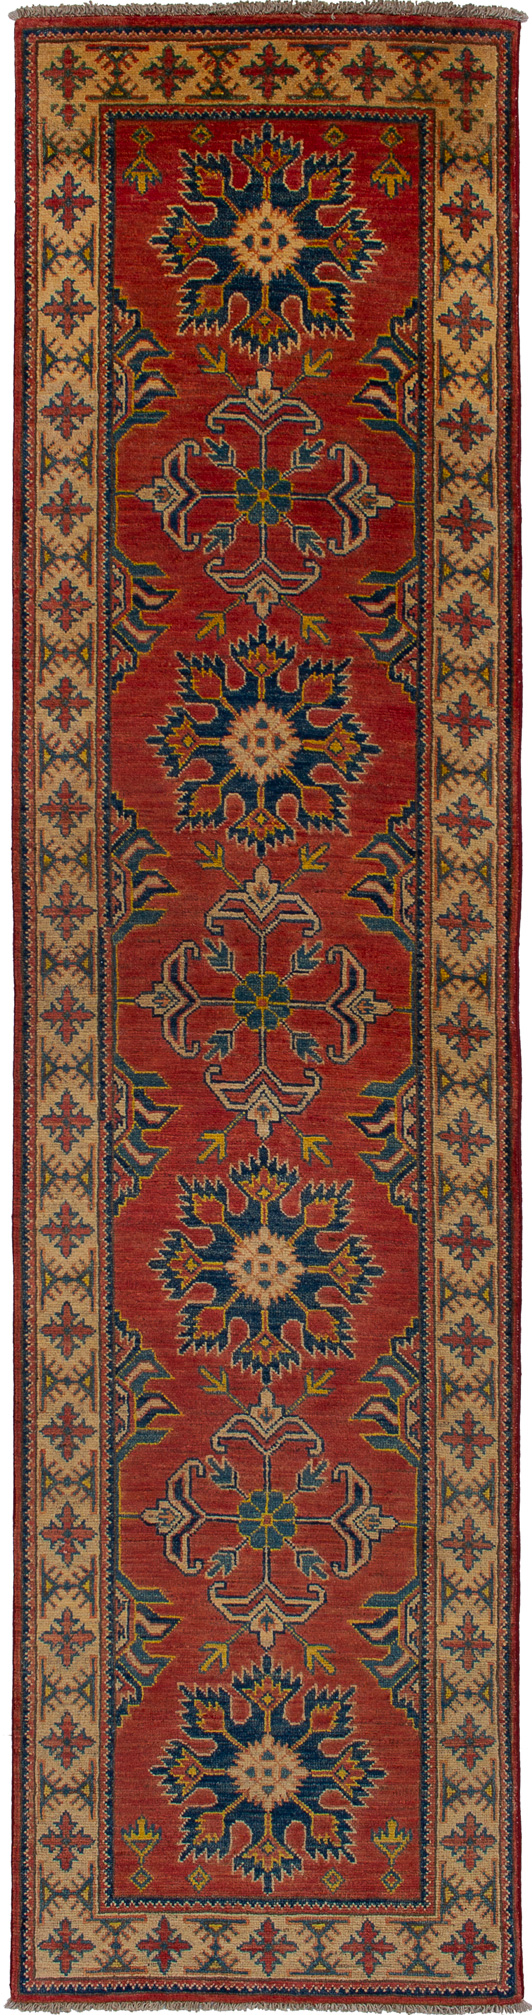 Hand-knotted Finest Gazni Dark Copper Wool Rug 2'5" x 10'2" Size: 2'5" x 10'2"  